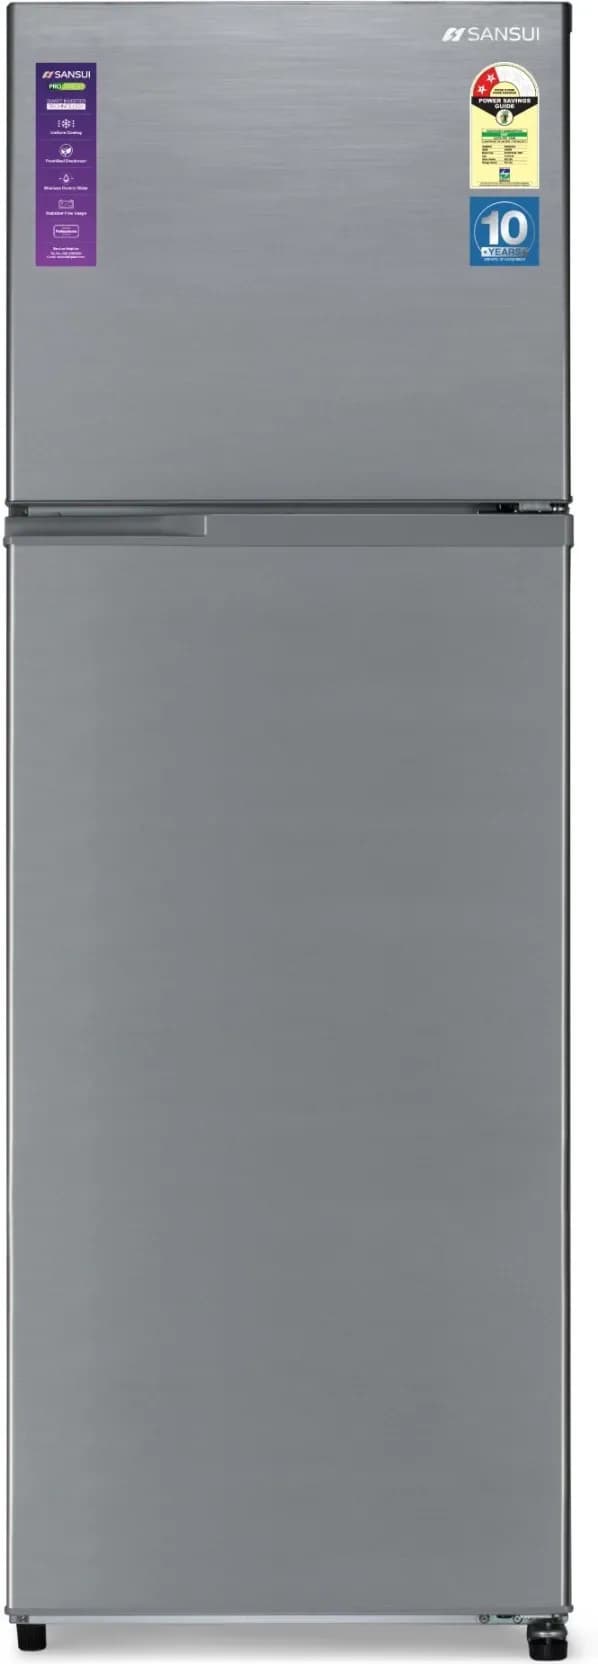 Sansui 310JF2SNDS 308 Ltr Double Door Refrigerator